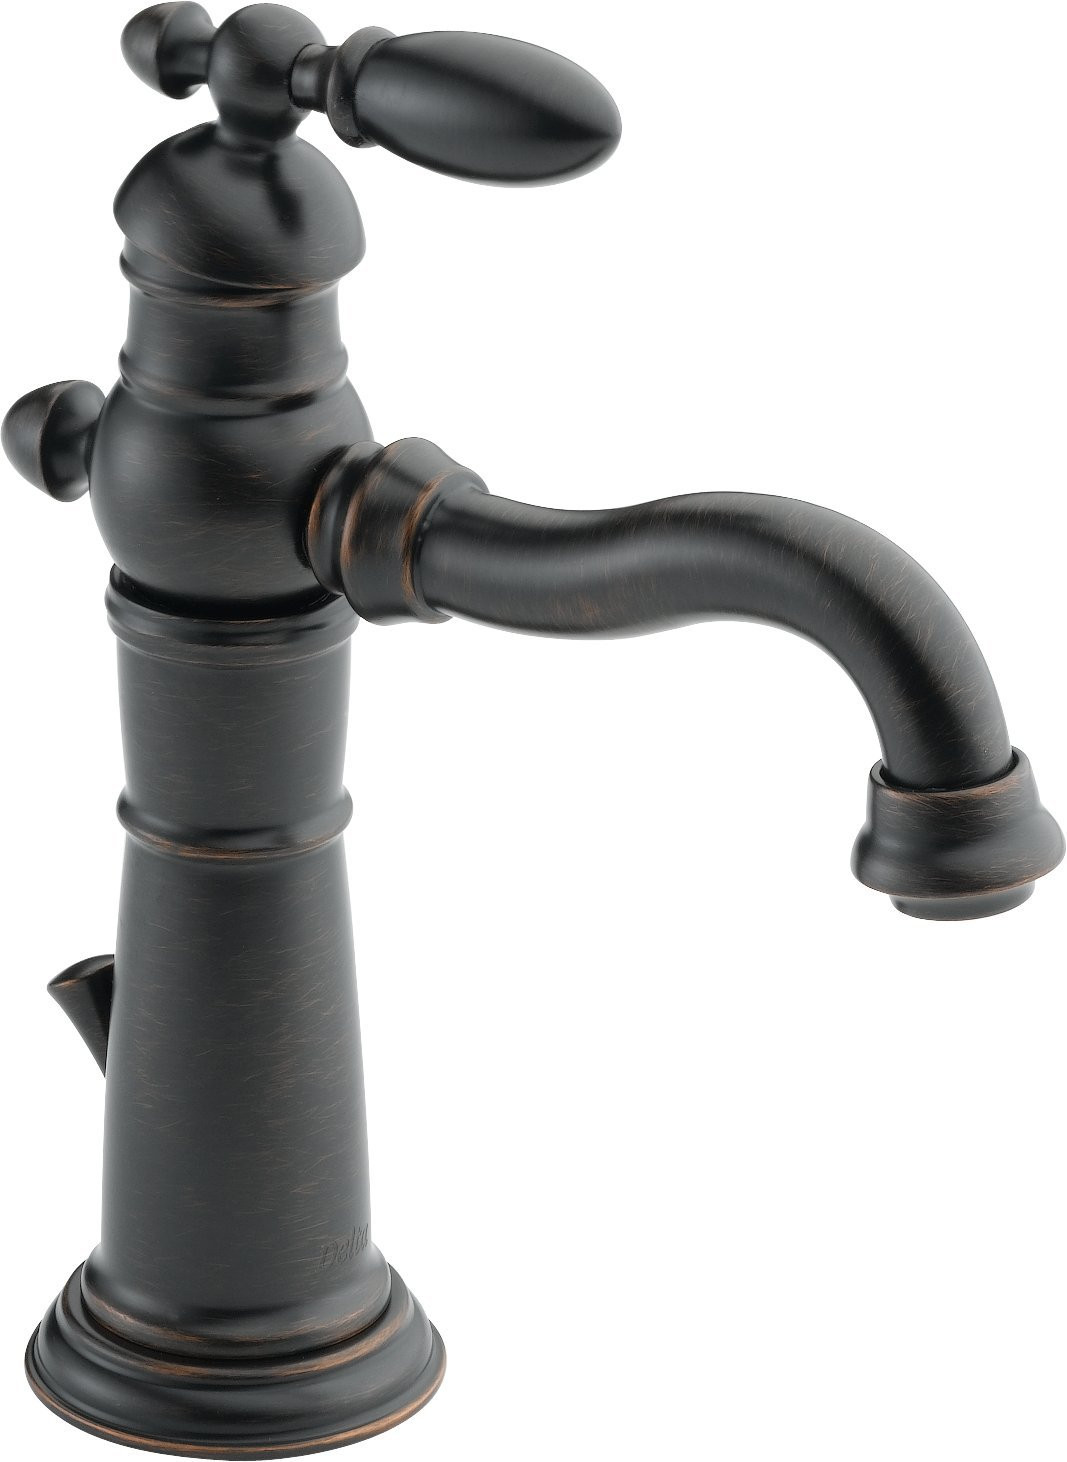 Delta Bronze Bathroom Faucet
 Delta Faucet Victorian Single Handle Bathroom Faucet with